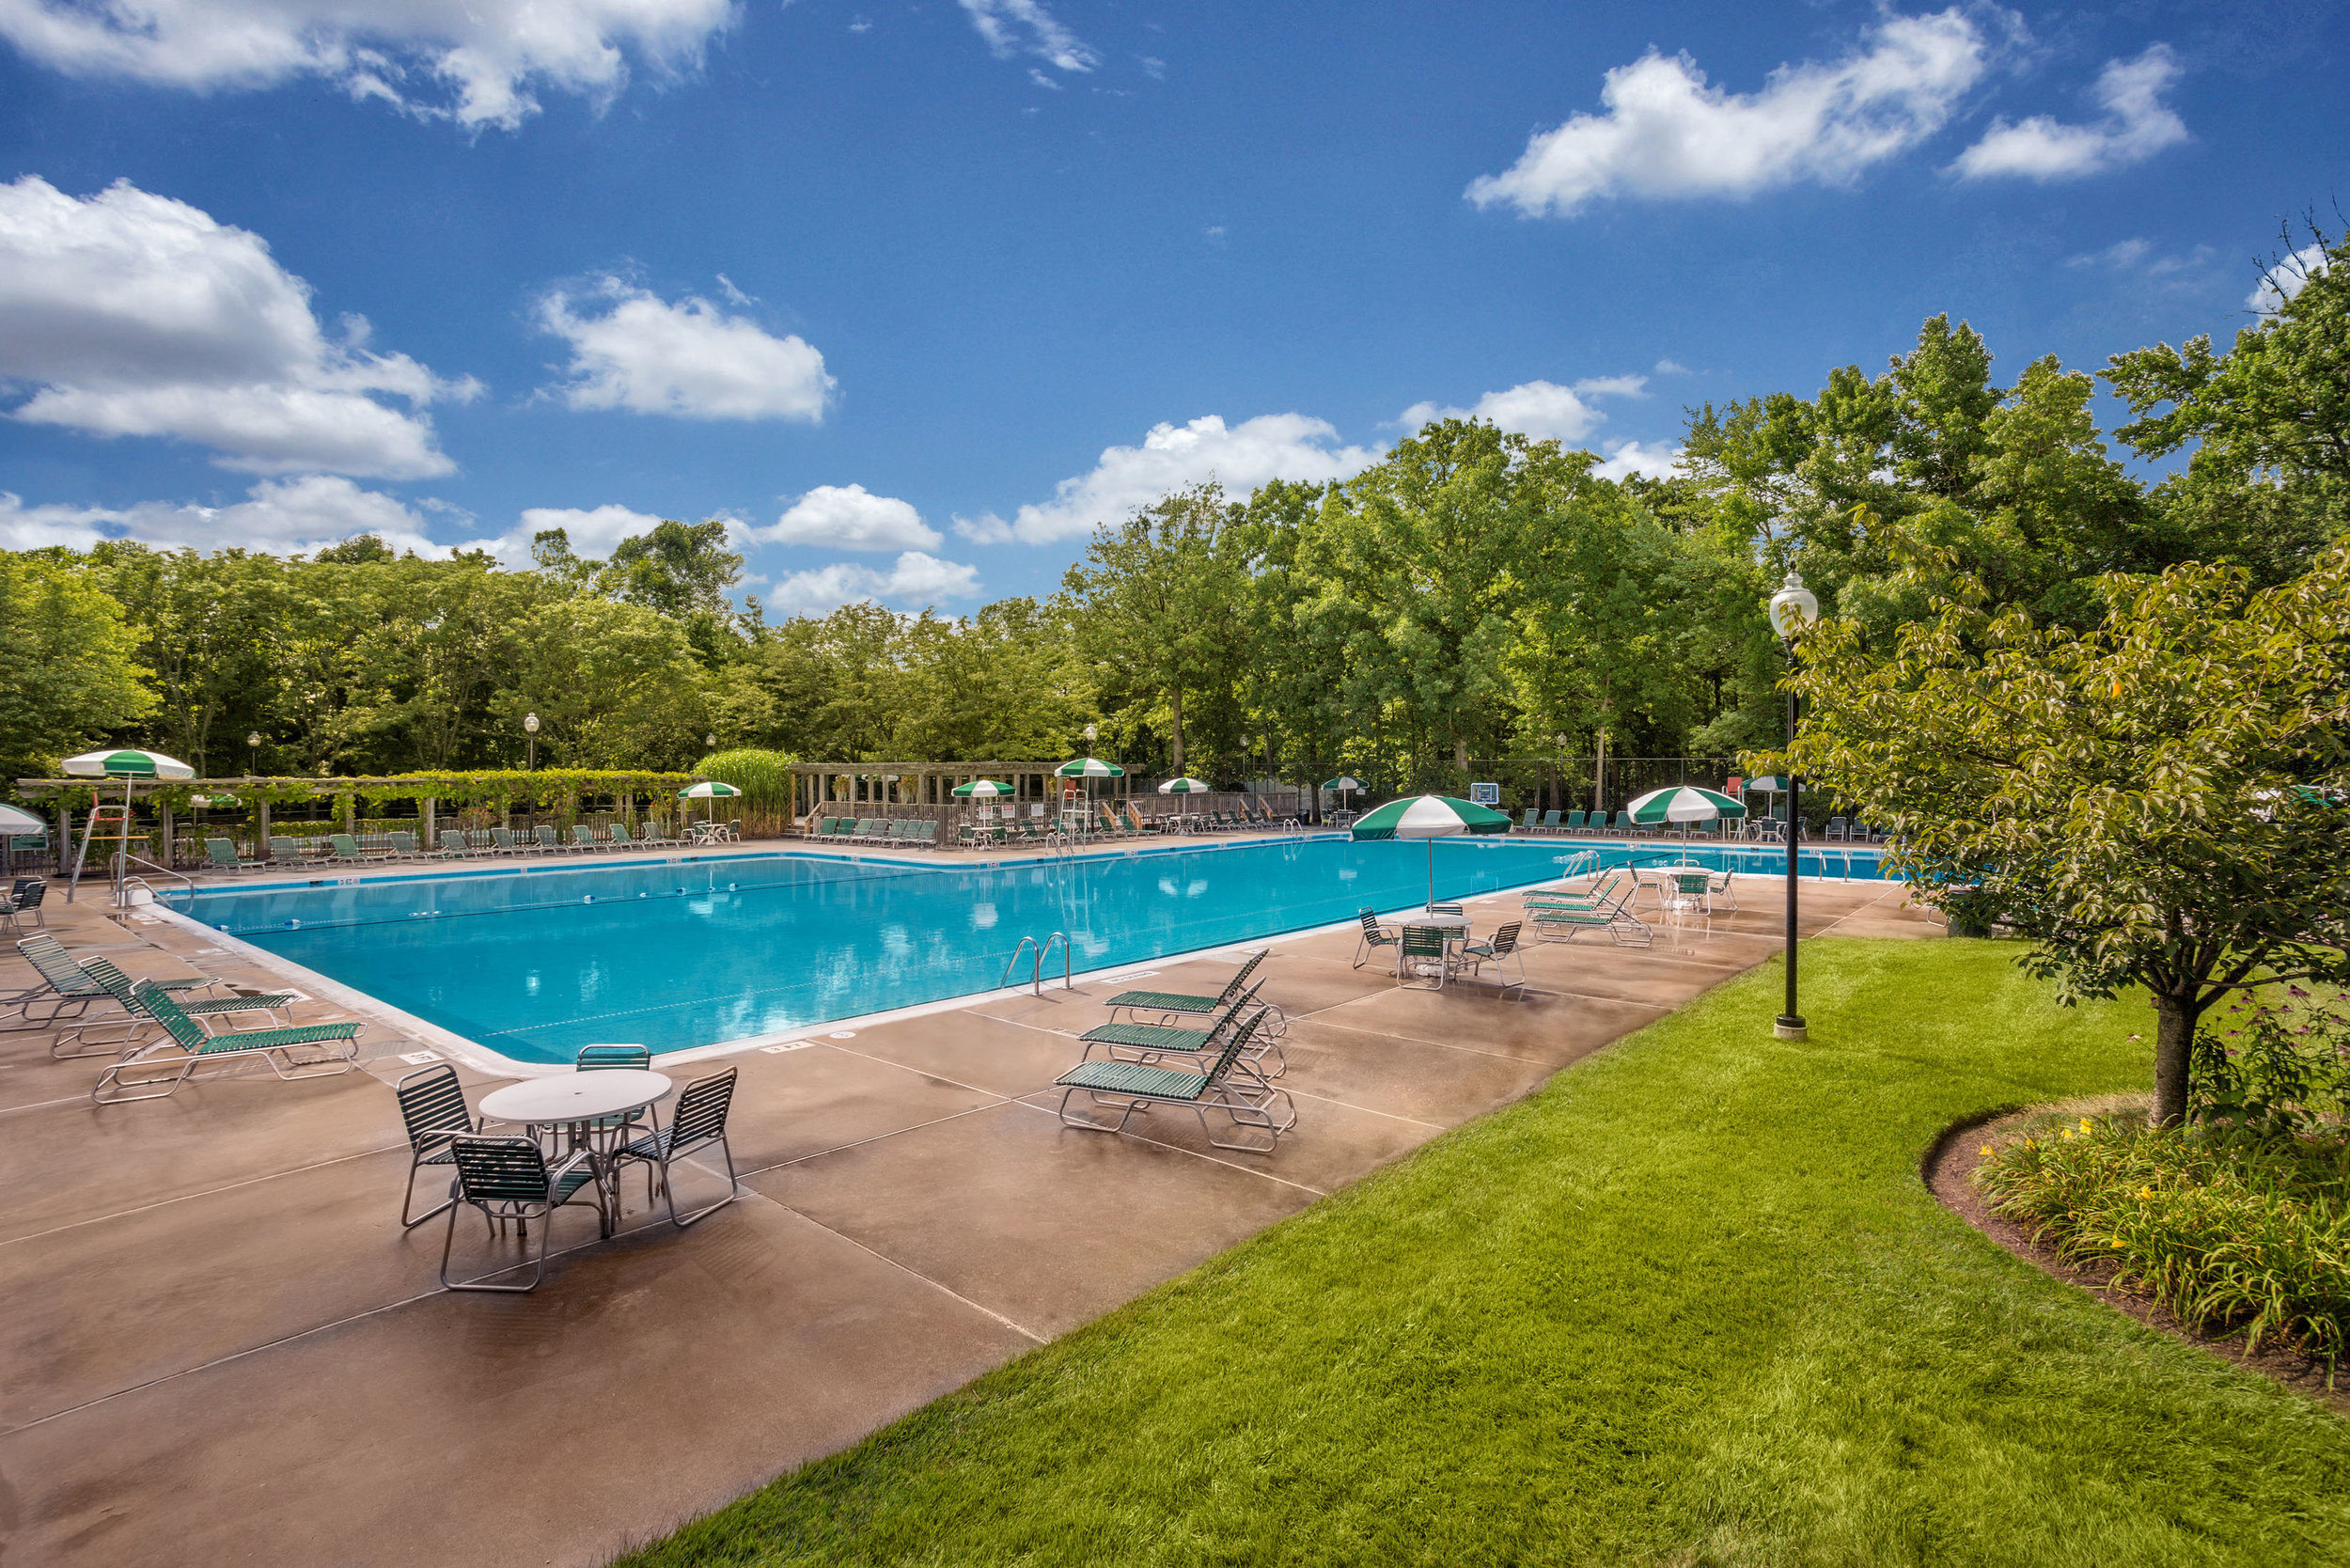 Swimming pool at Glen Oaks apartments